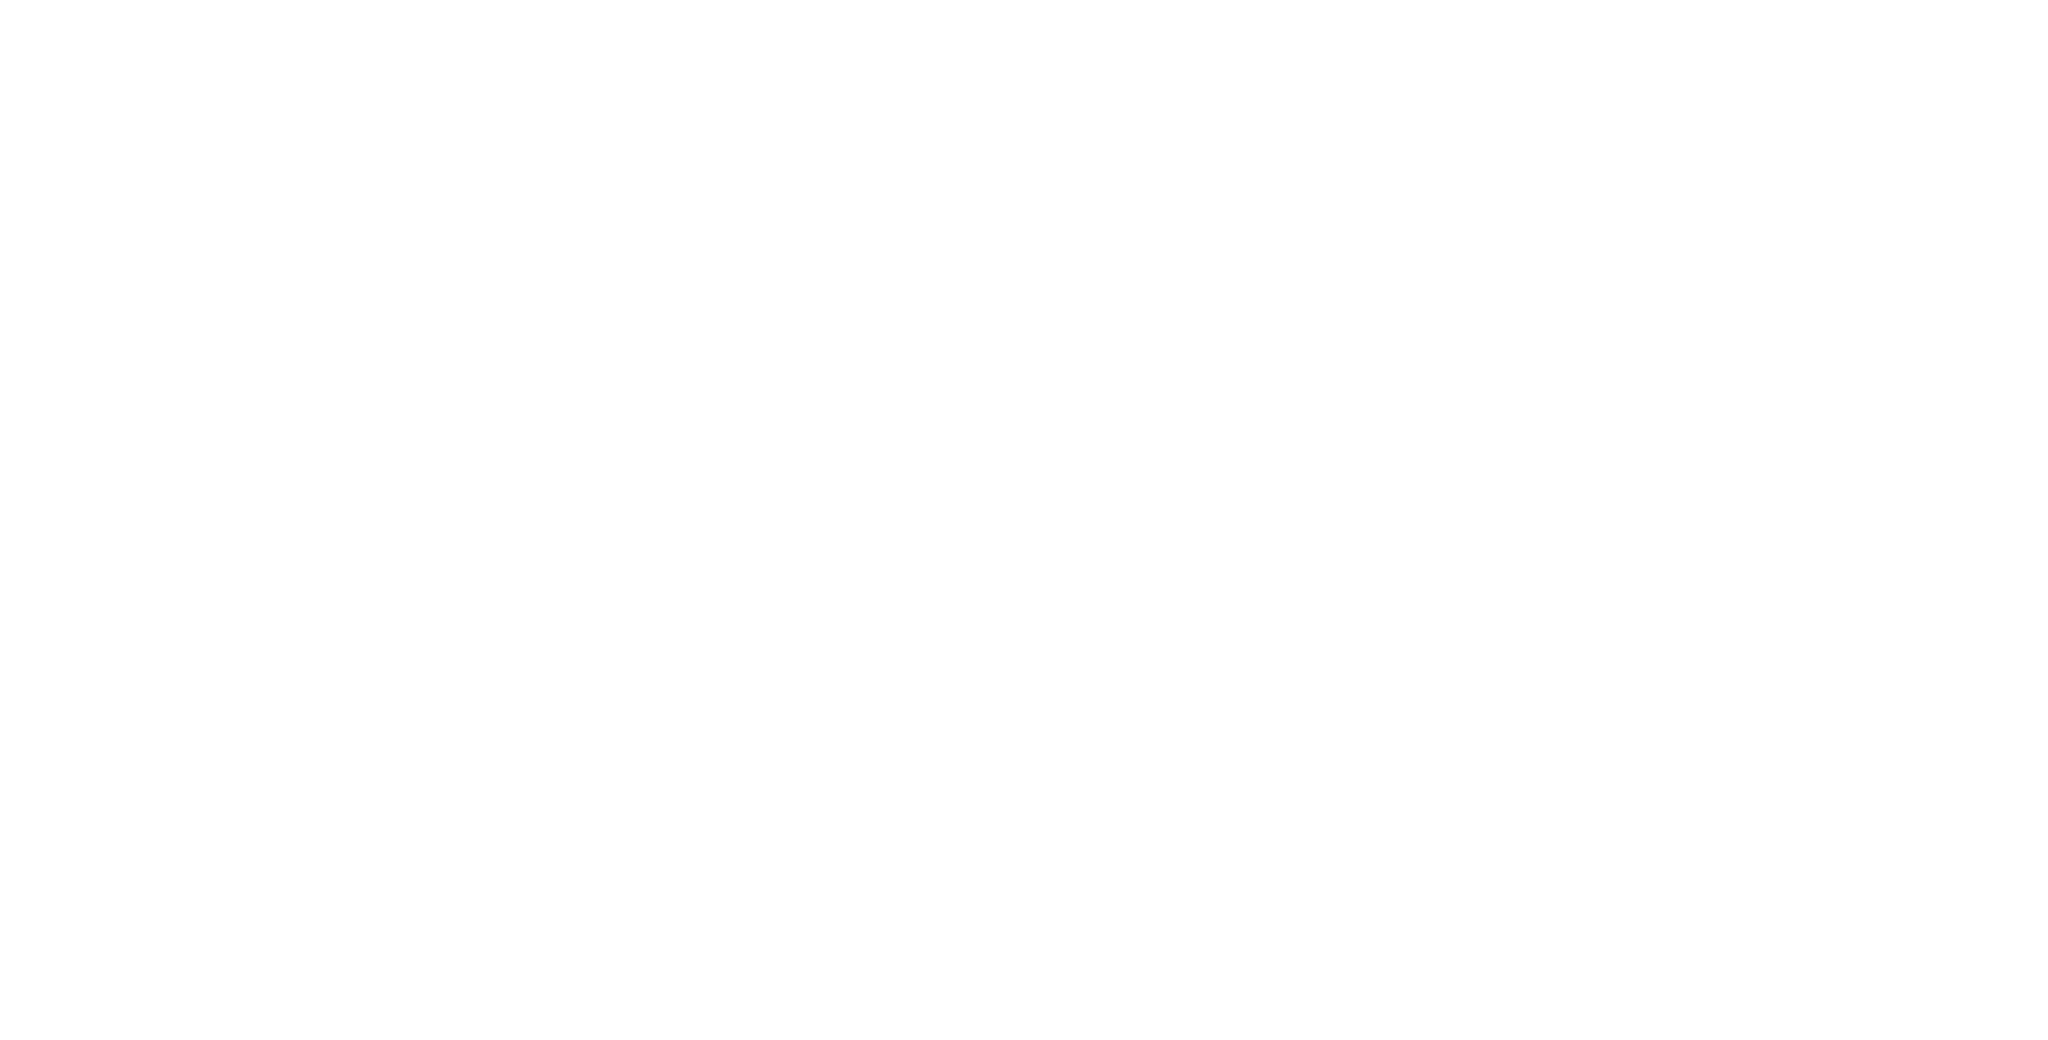 uweed logo